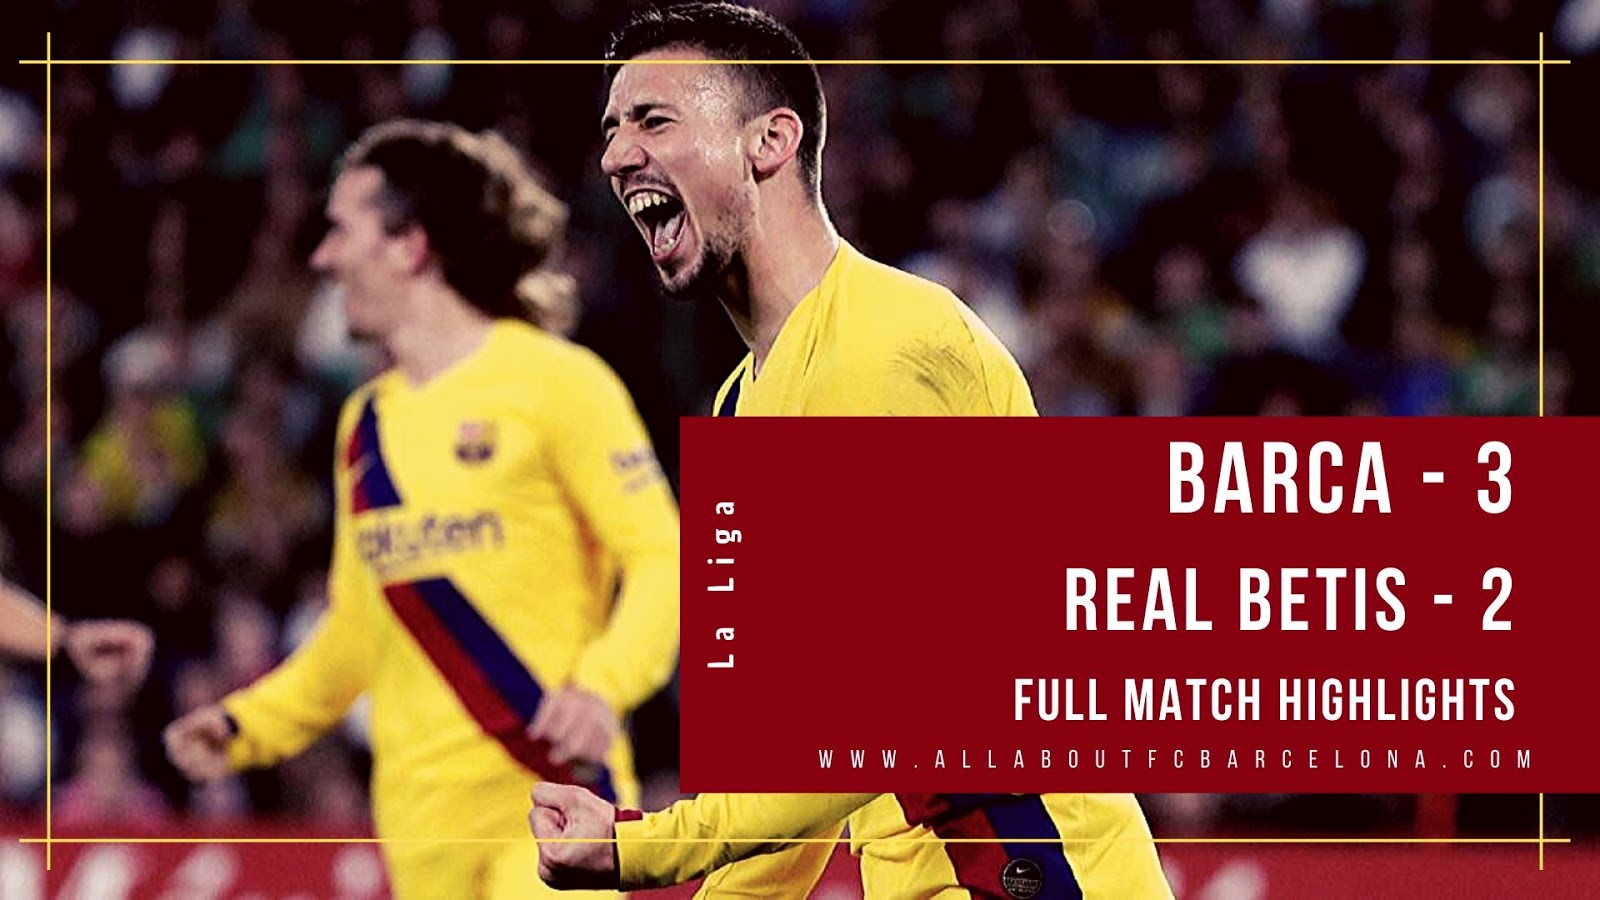 Mark Overbevisende ambition FC Barcelona vs Real Betis Highlights Video | Barca - 3, Real Betis - 2